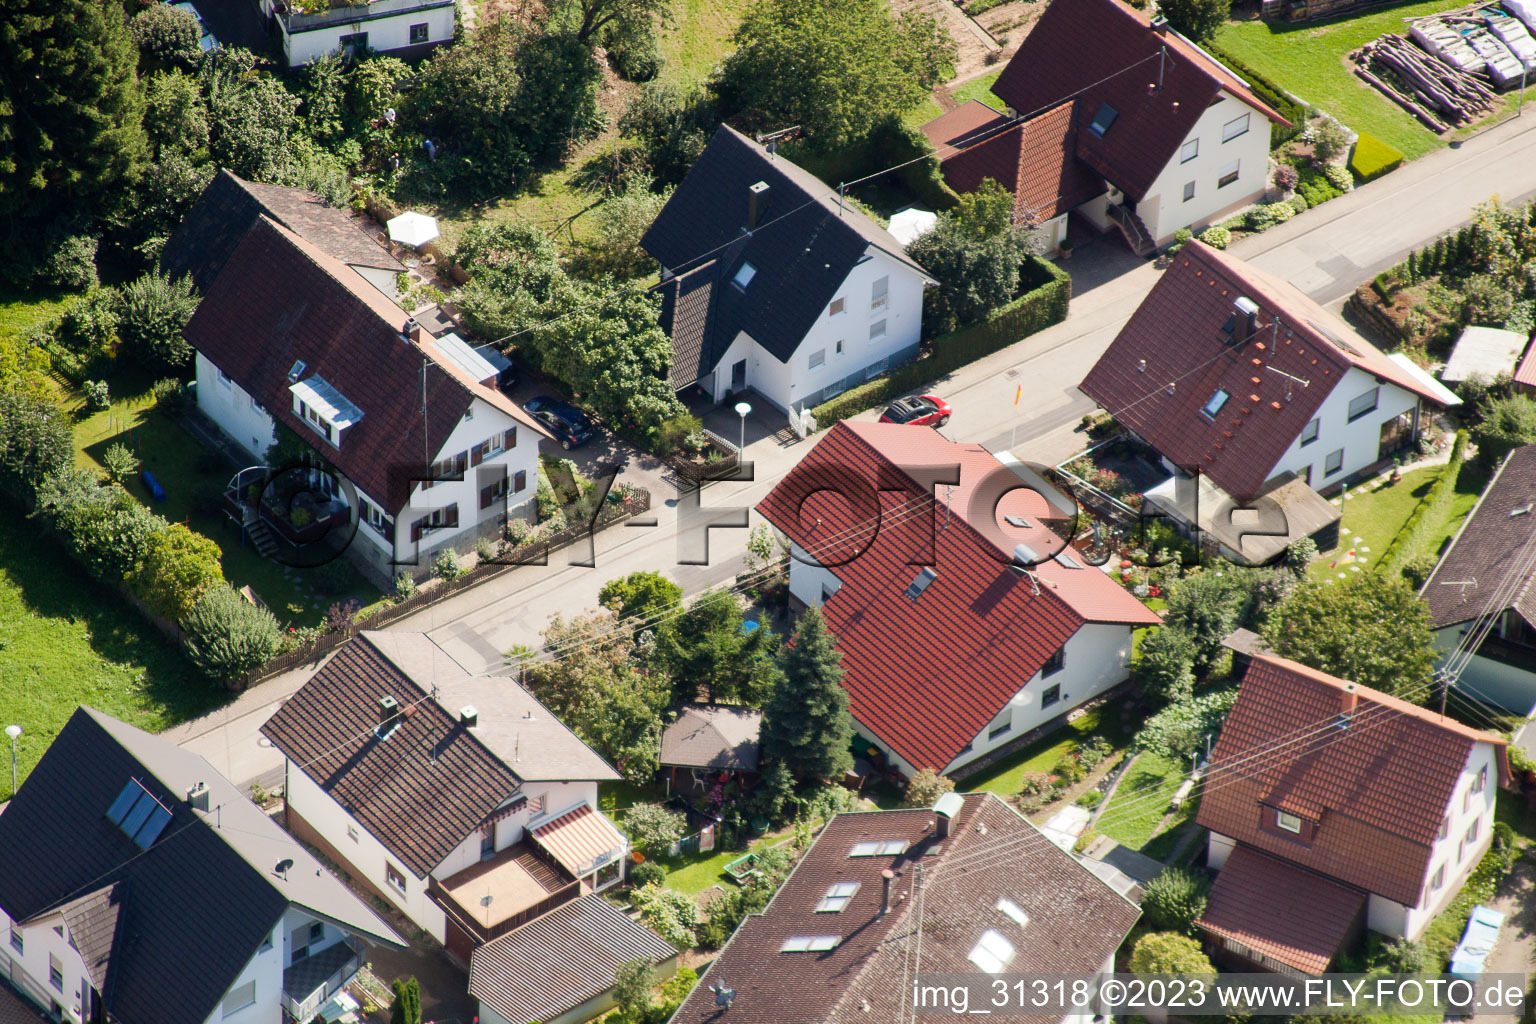 Varnhalt, Gartenstr à le quartier Gallenbach in Baden-Baden dans le département Bade-Wurtemberg, Allemagne du point de vue du drone